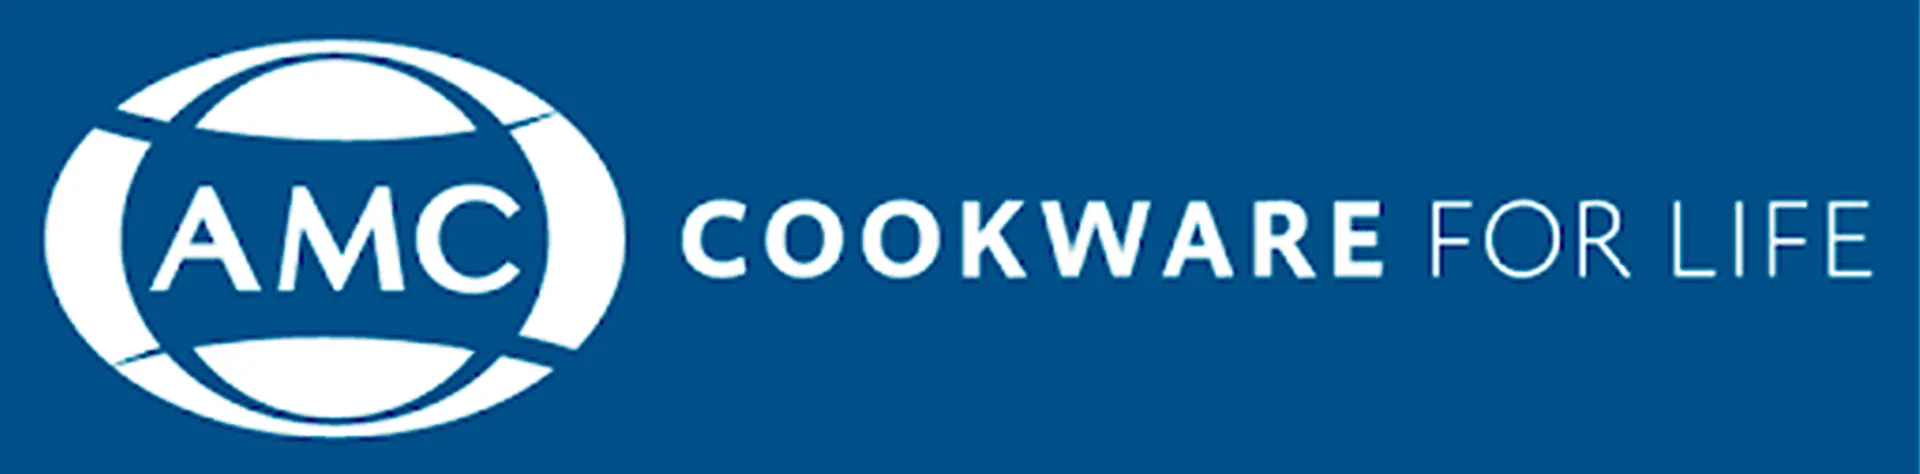 AMC COOKWARE logo